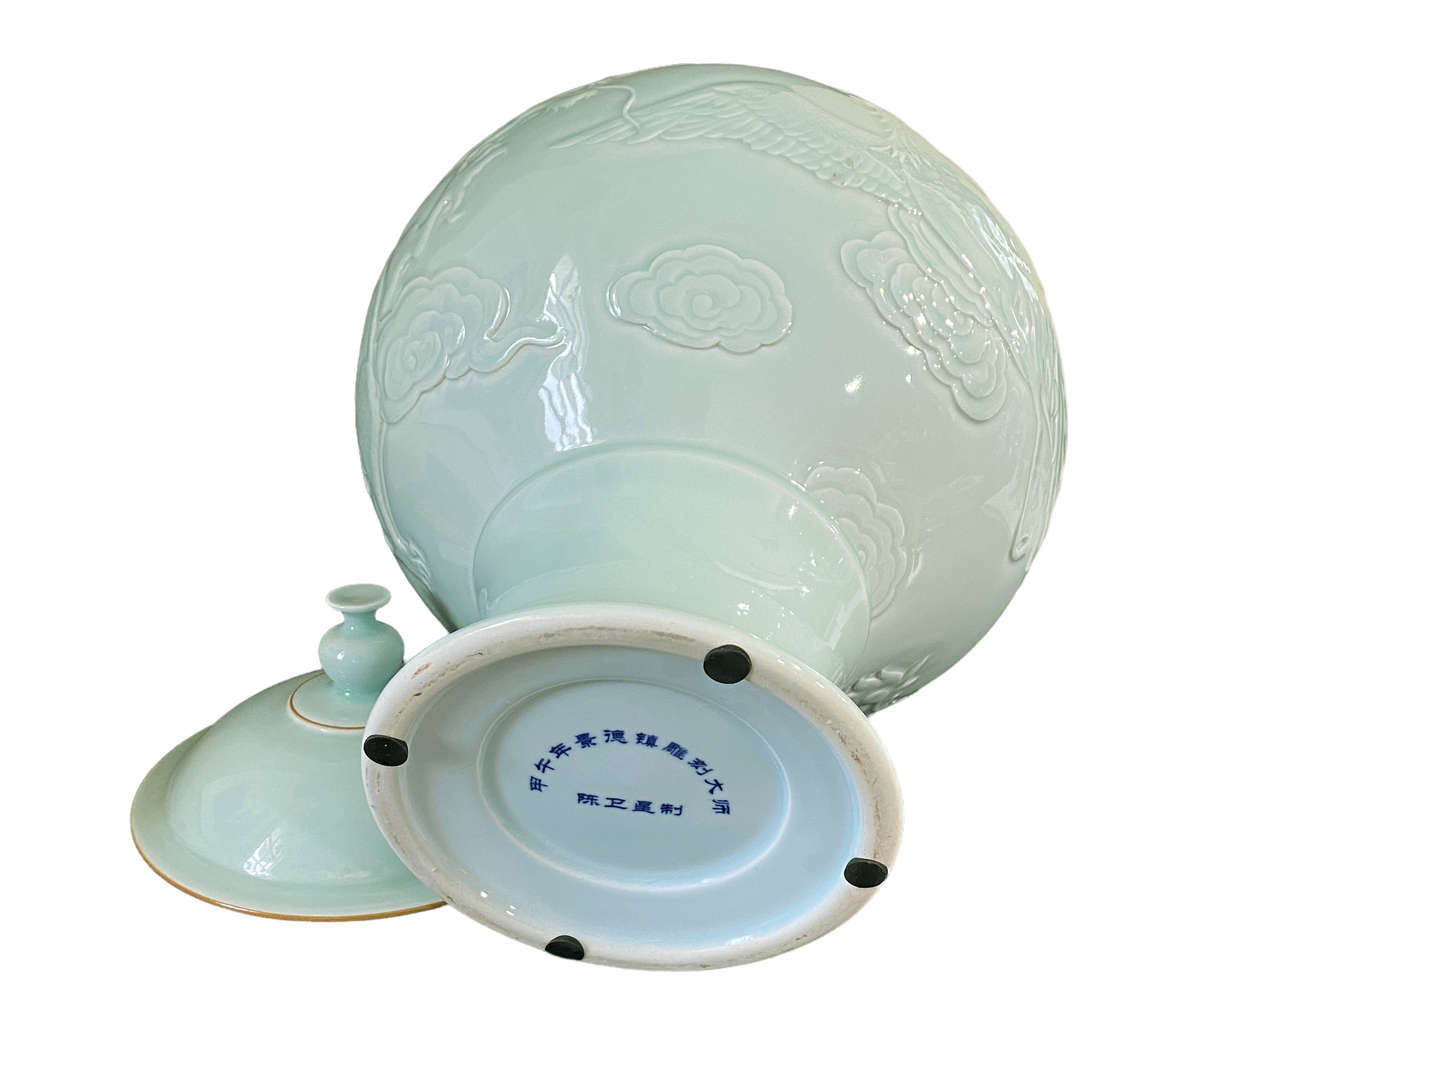 #993 Chinoiserie Porcelain Celadon Glaze Lidded Ginger Jar  19.5" H .